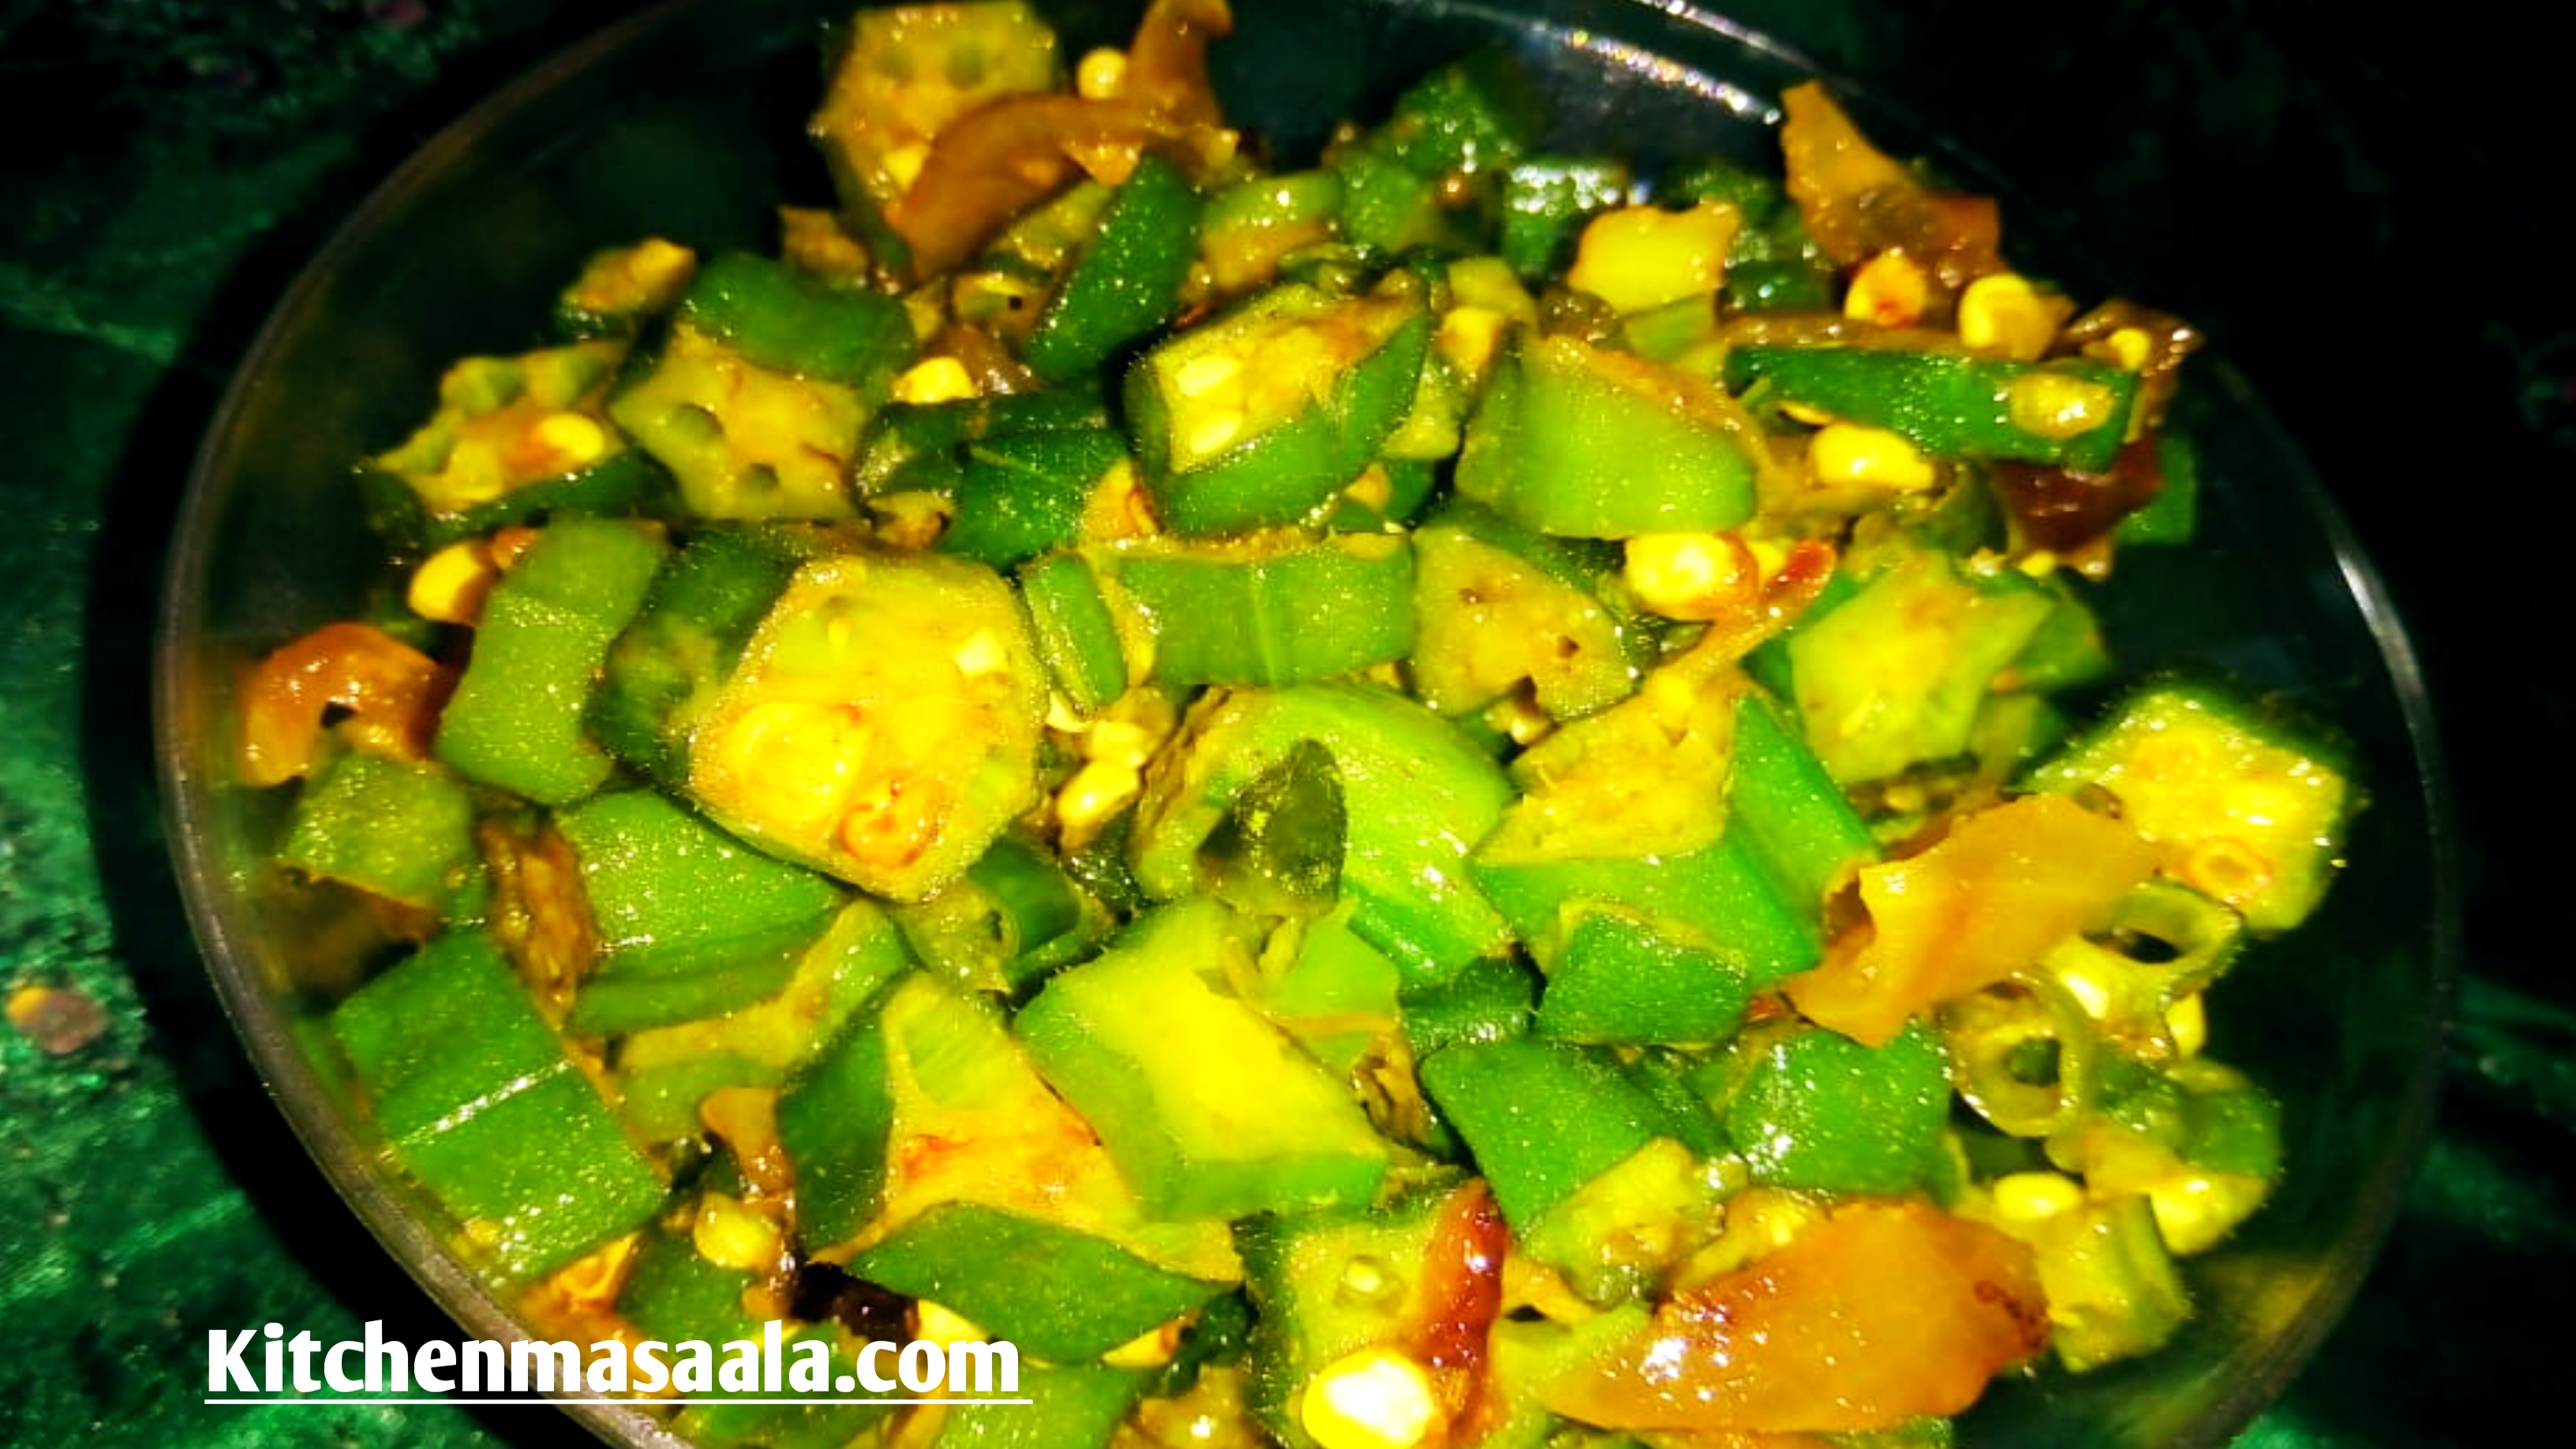 भिंडी प्याज की सब्जी || Bhindi Pyaj ki sabji Recipe in Hindi, Bhindi pyaj ki sabji Image, भिंडी प्याज की सब्जी फोटो